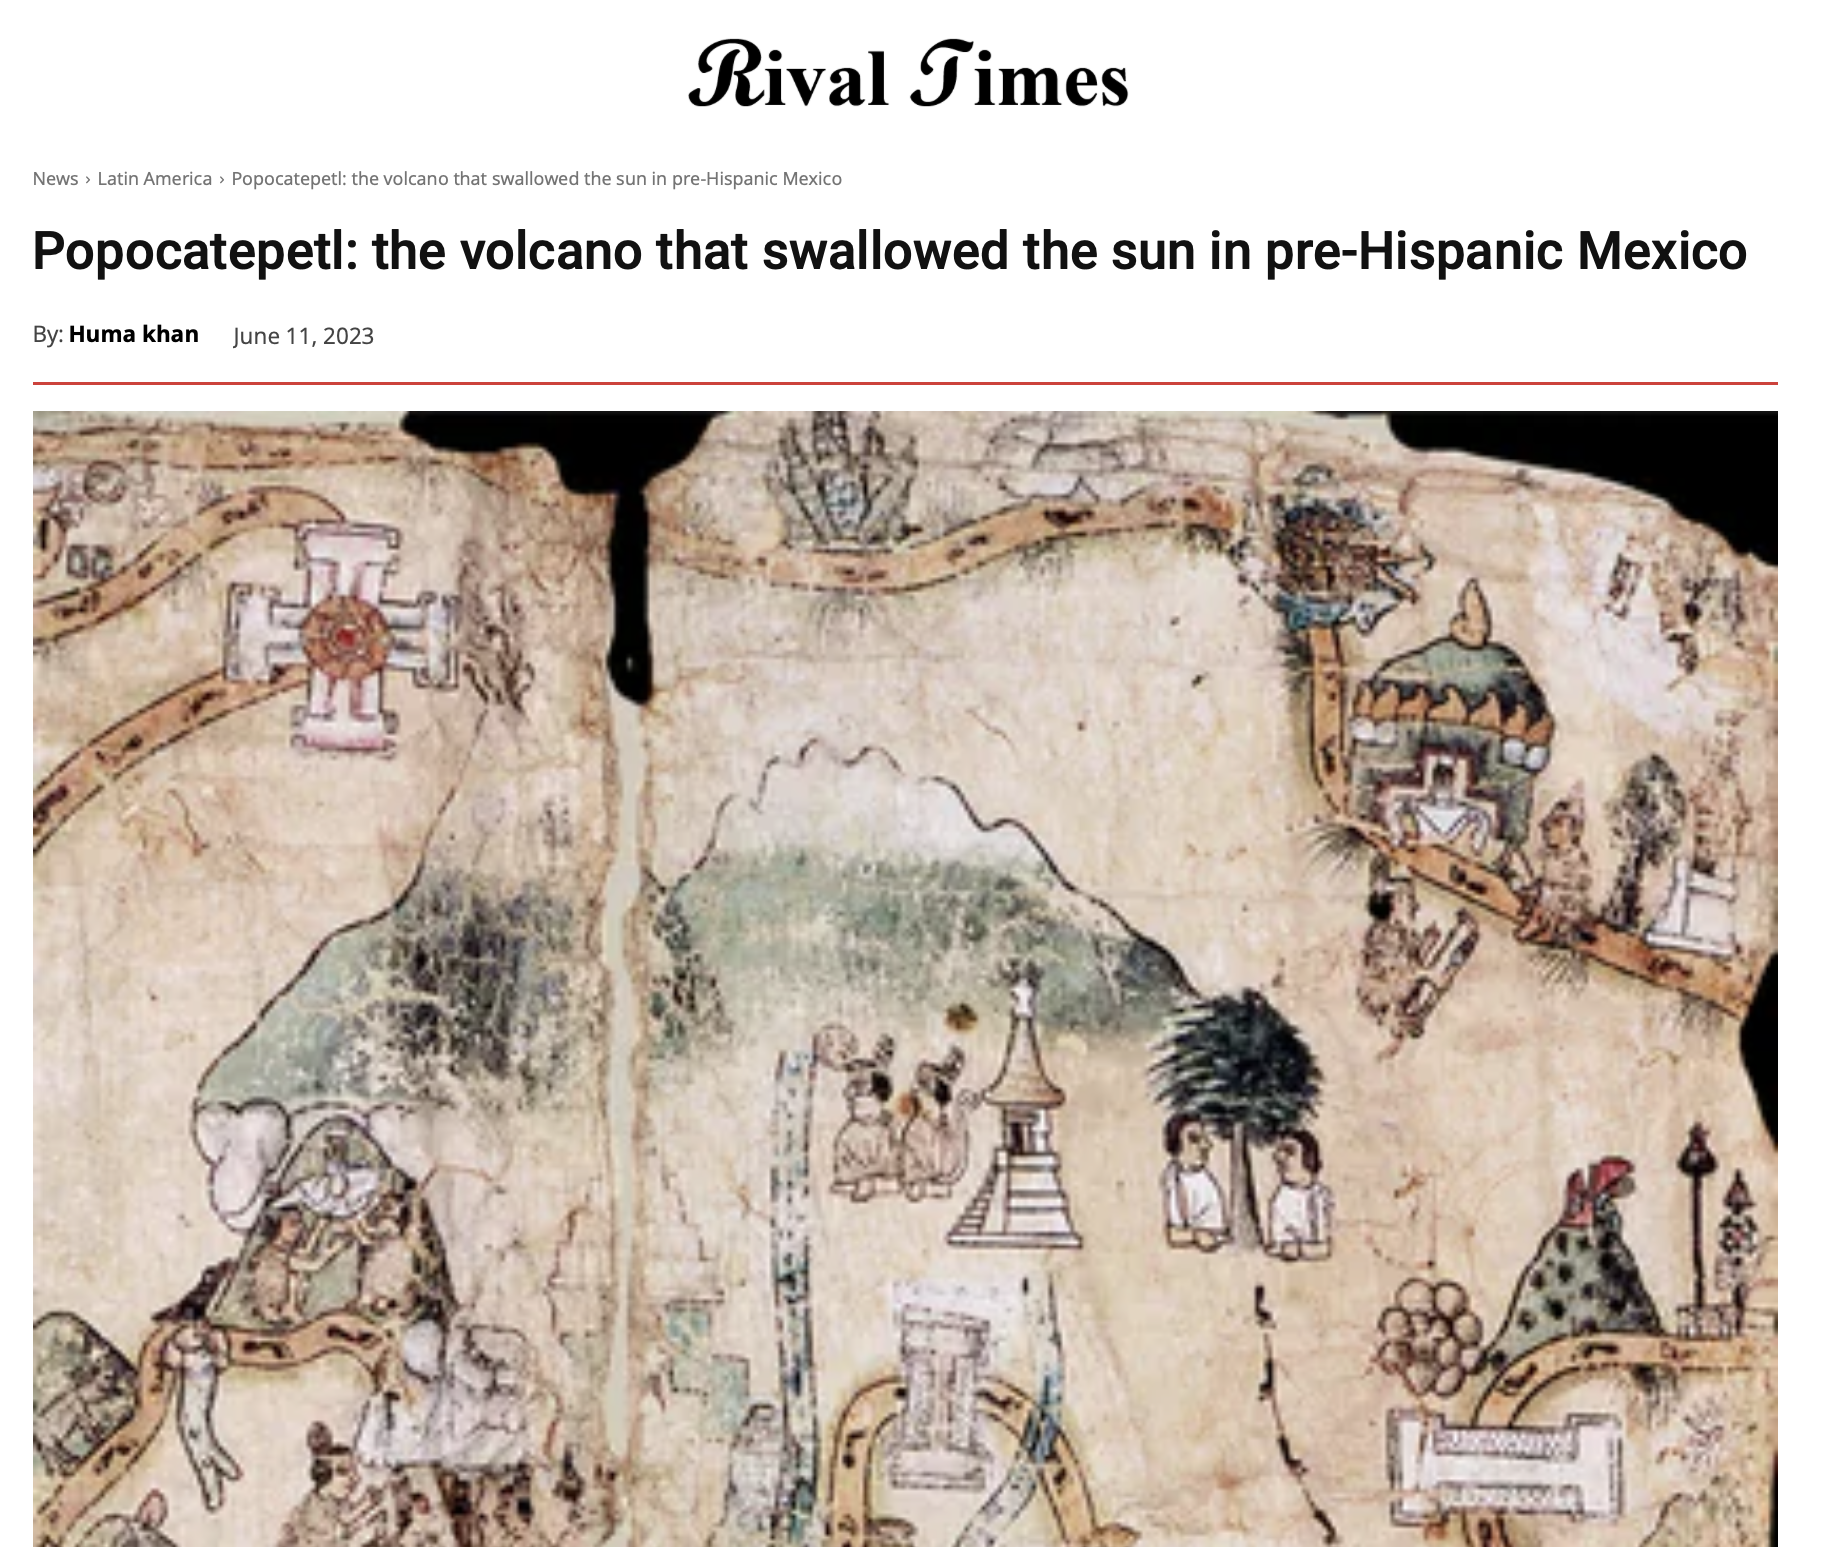 Popocatepetl: the volcano that swallowed the sun in pre-Hispanic Mexico